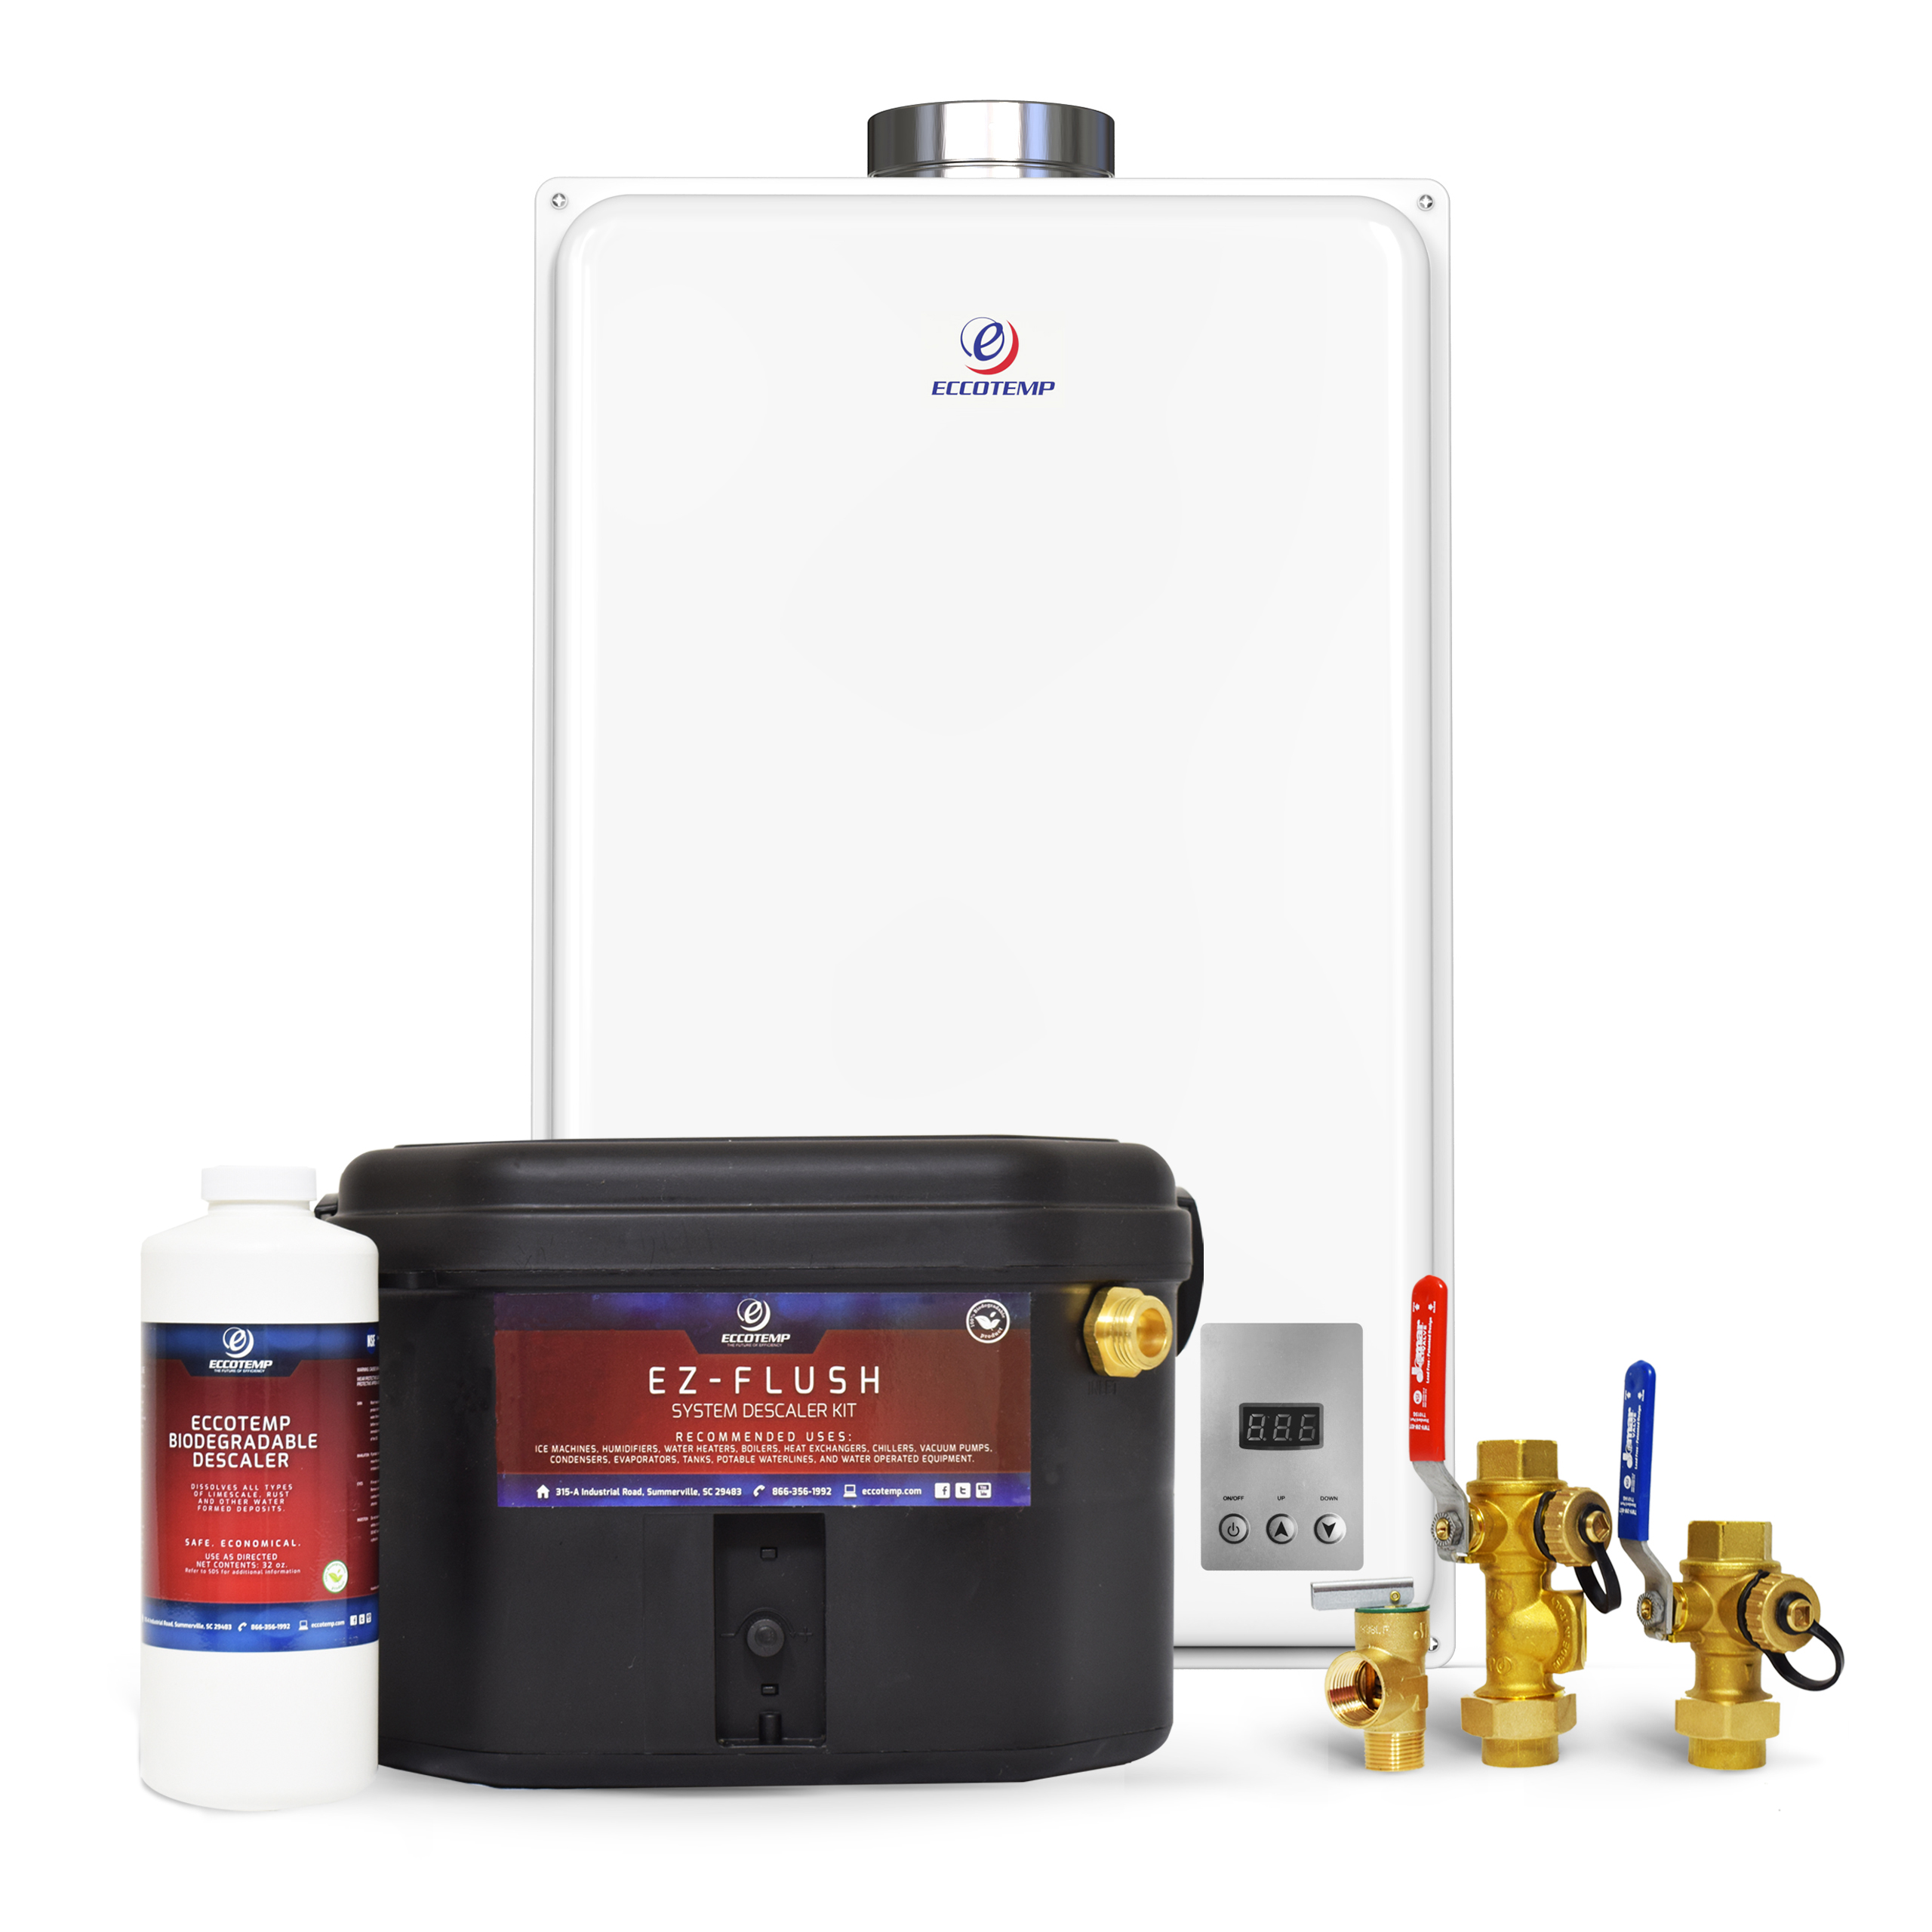 Eccotemp 45HI Indoor 6.8 GPM Liquid Propane Tankless Water Heater Service Kit Bundle 